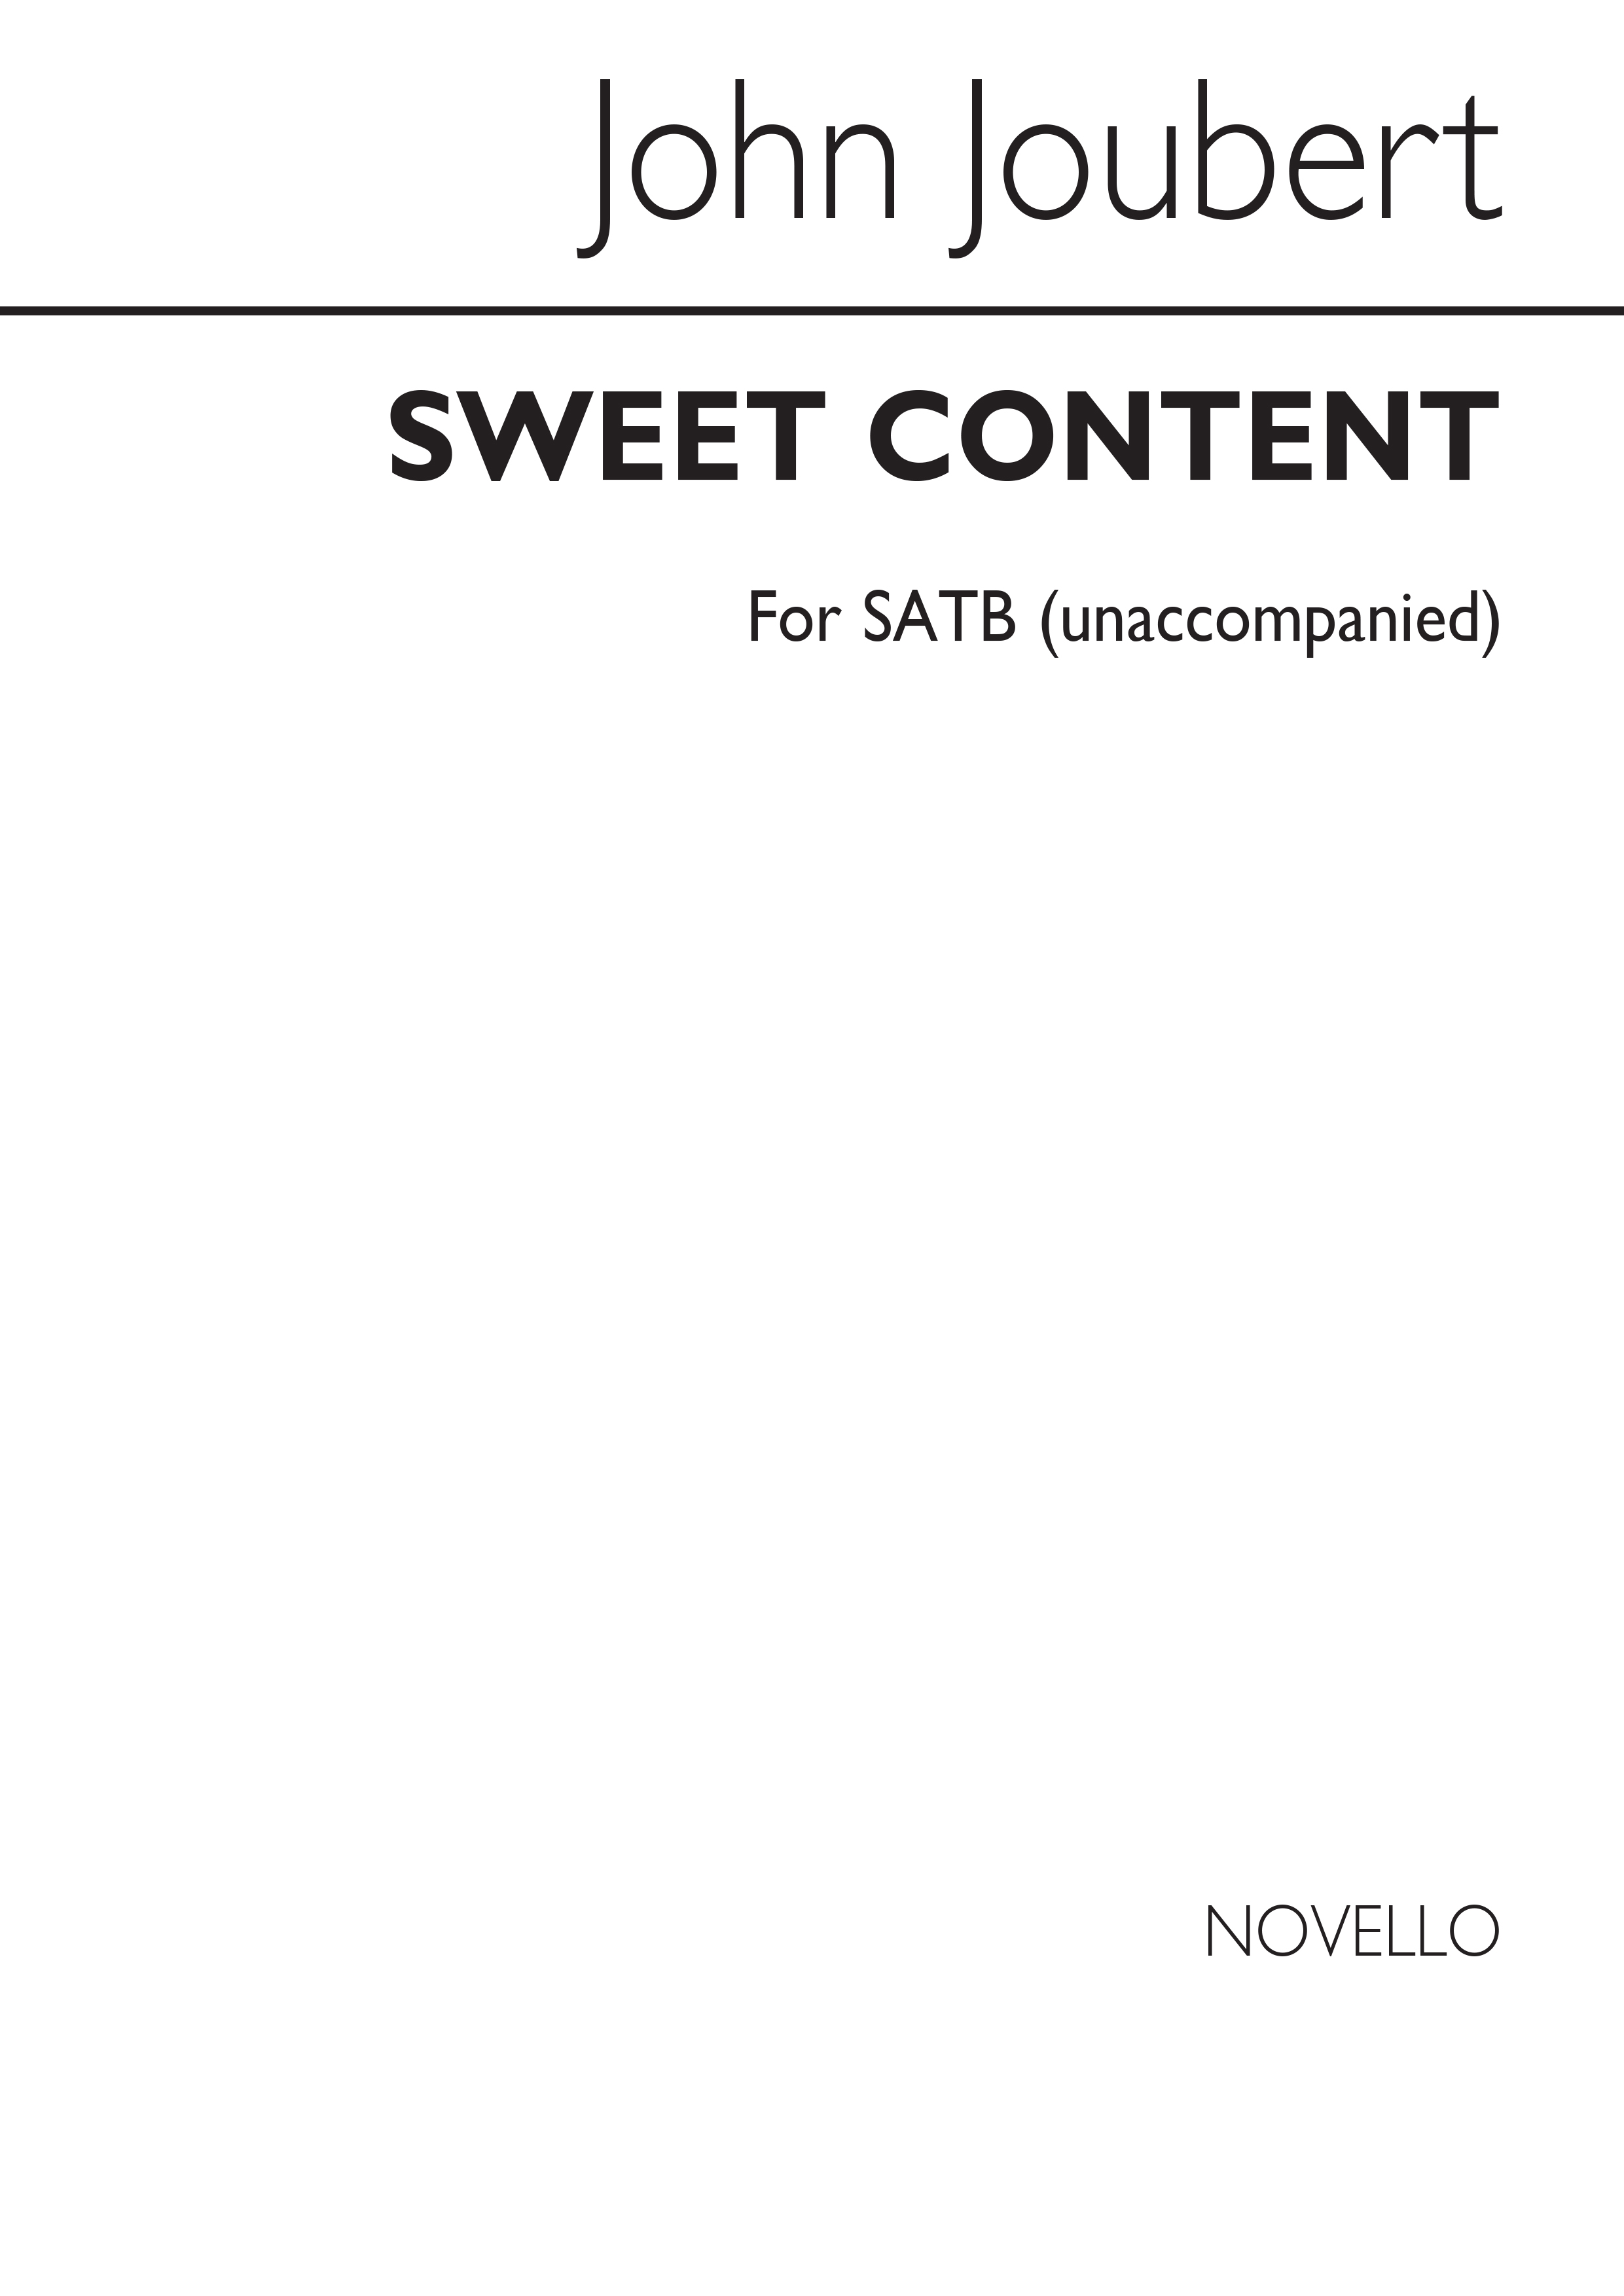 Joubert: Sweet Content for SATB Chorus